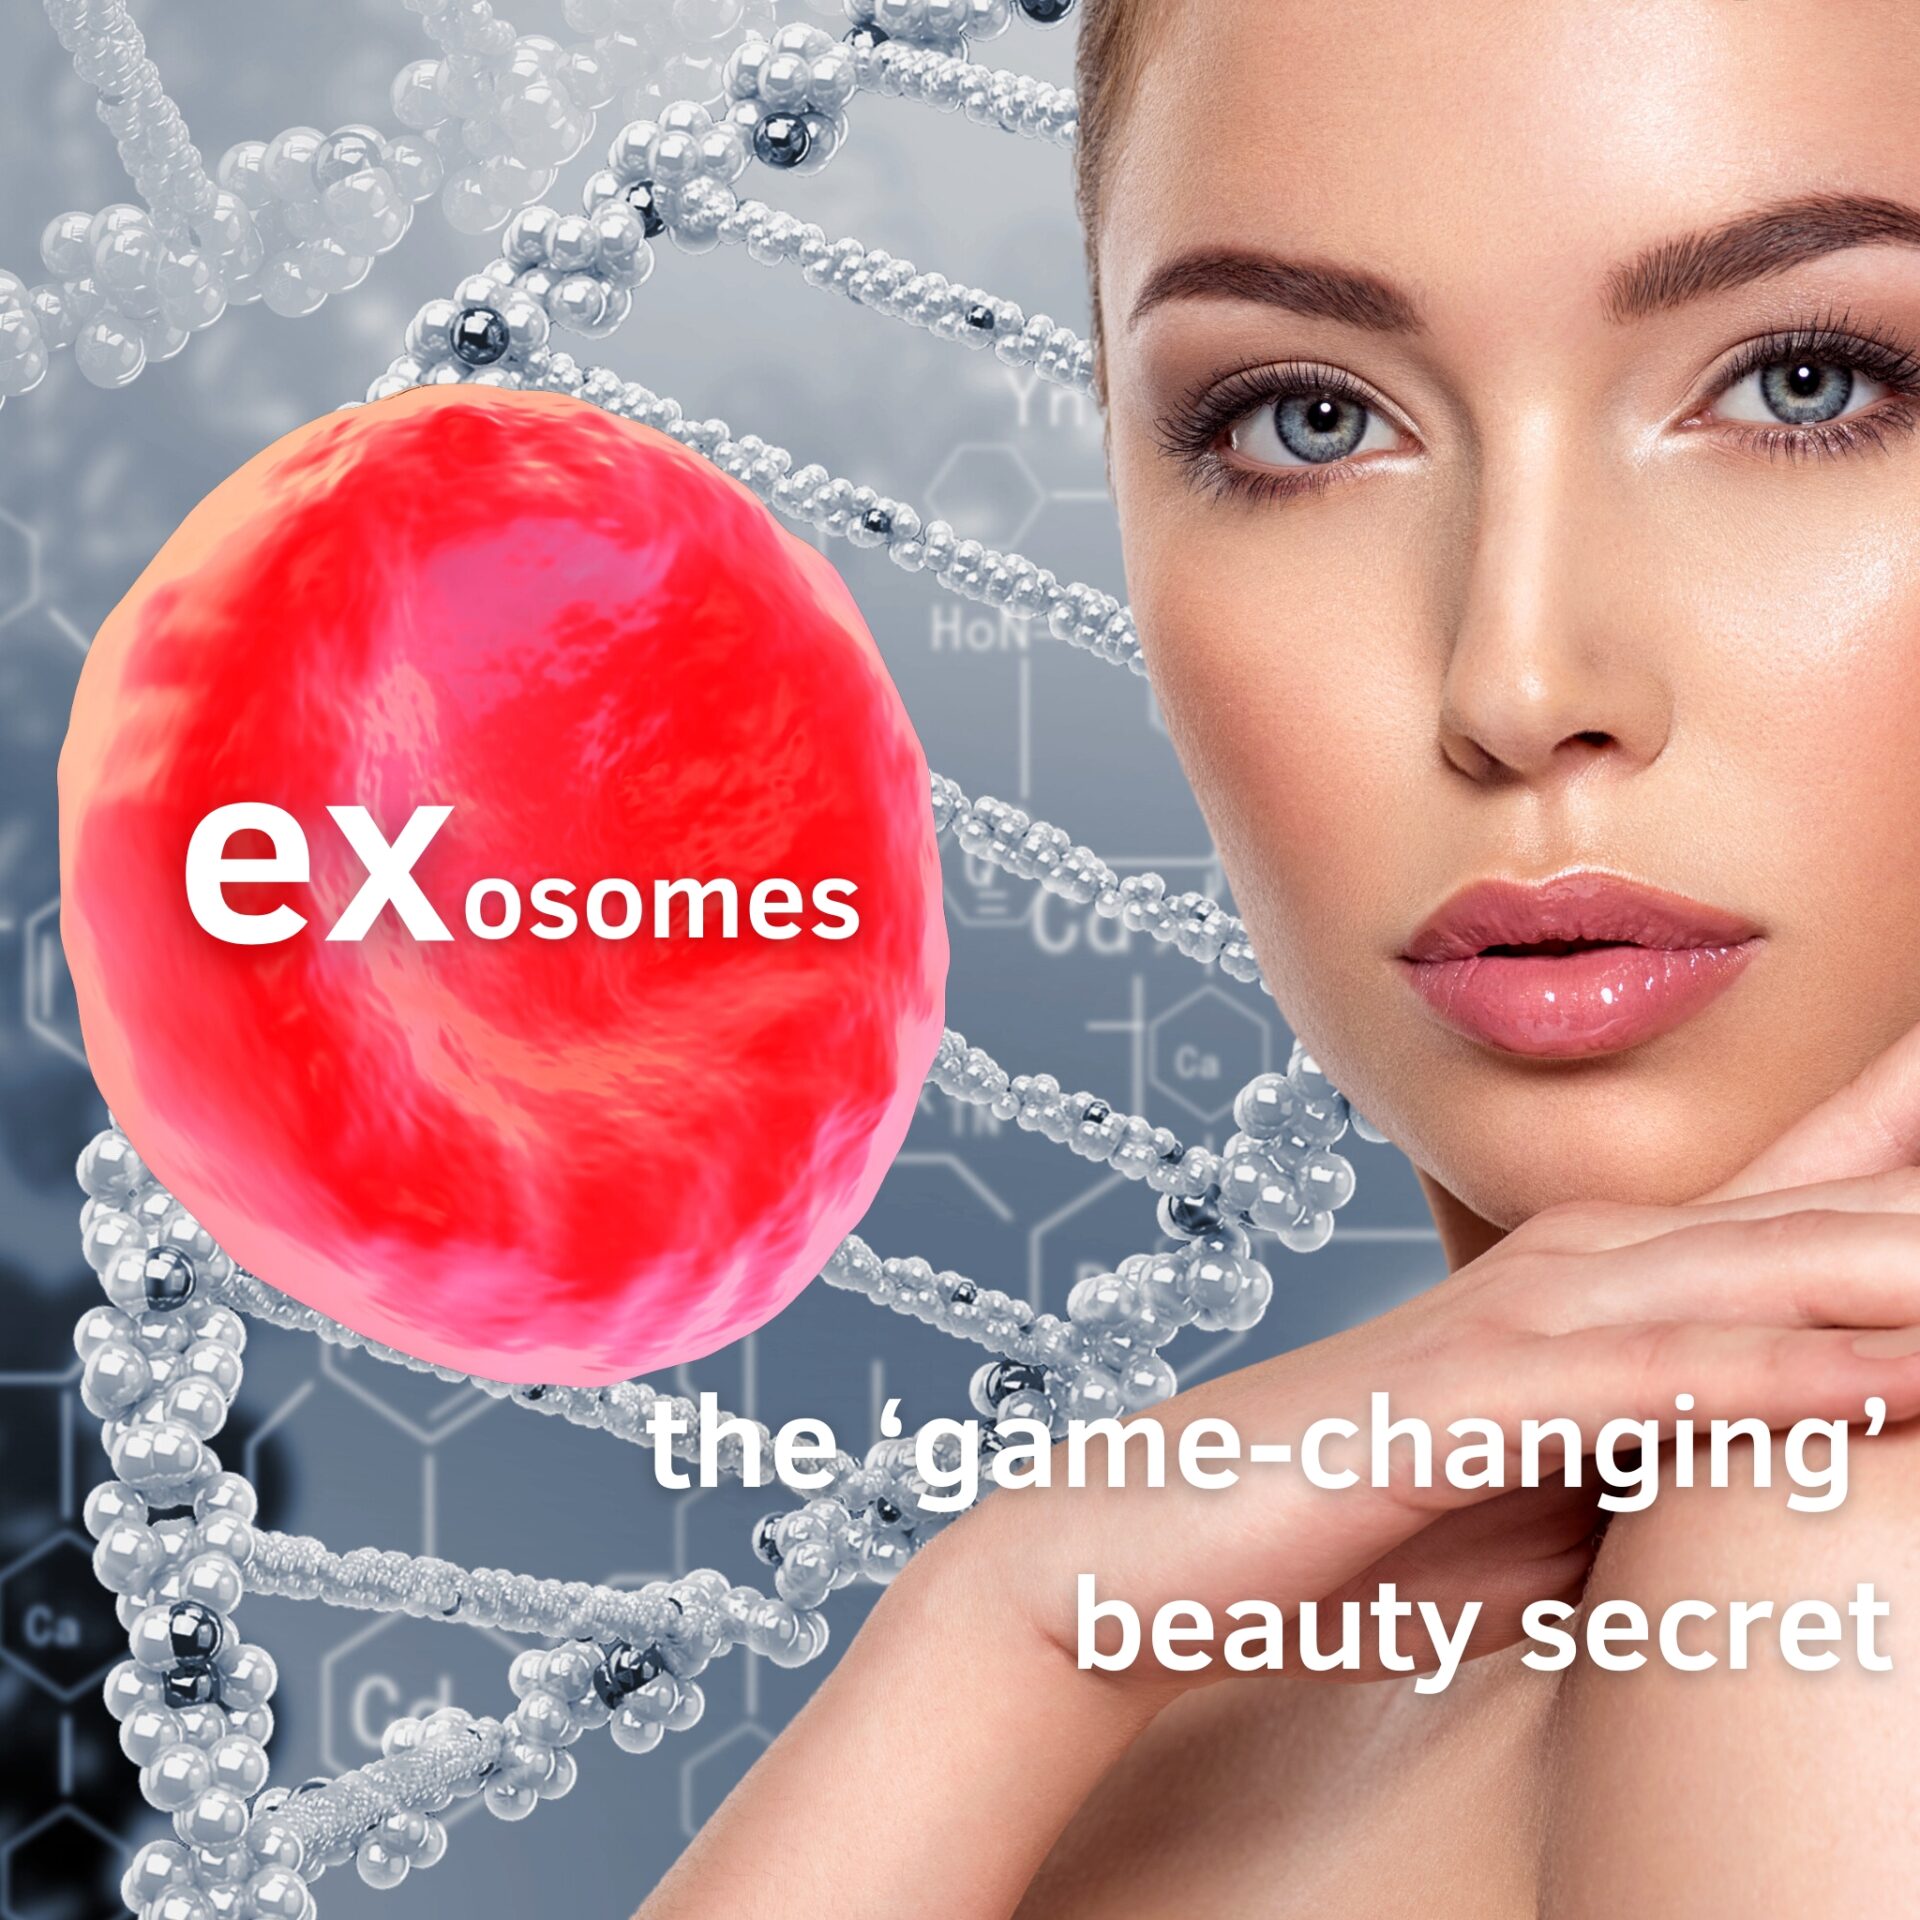 exosomes - Η θεραπεία με exosomes ανοίγει νέους ορίζοντες στην αναγεννητική αισθητική ιατρική και προσφέρει ασφαλή και αποτελεσματική λύση για την αντιμετώπιση της γήρανσης